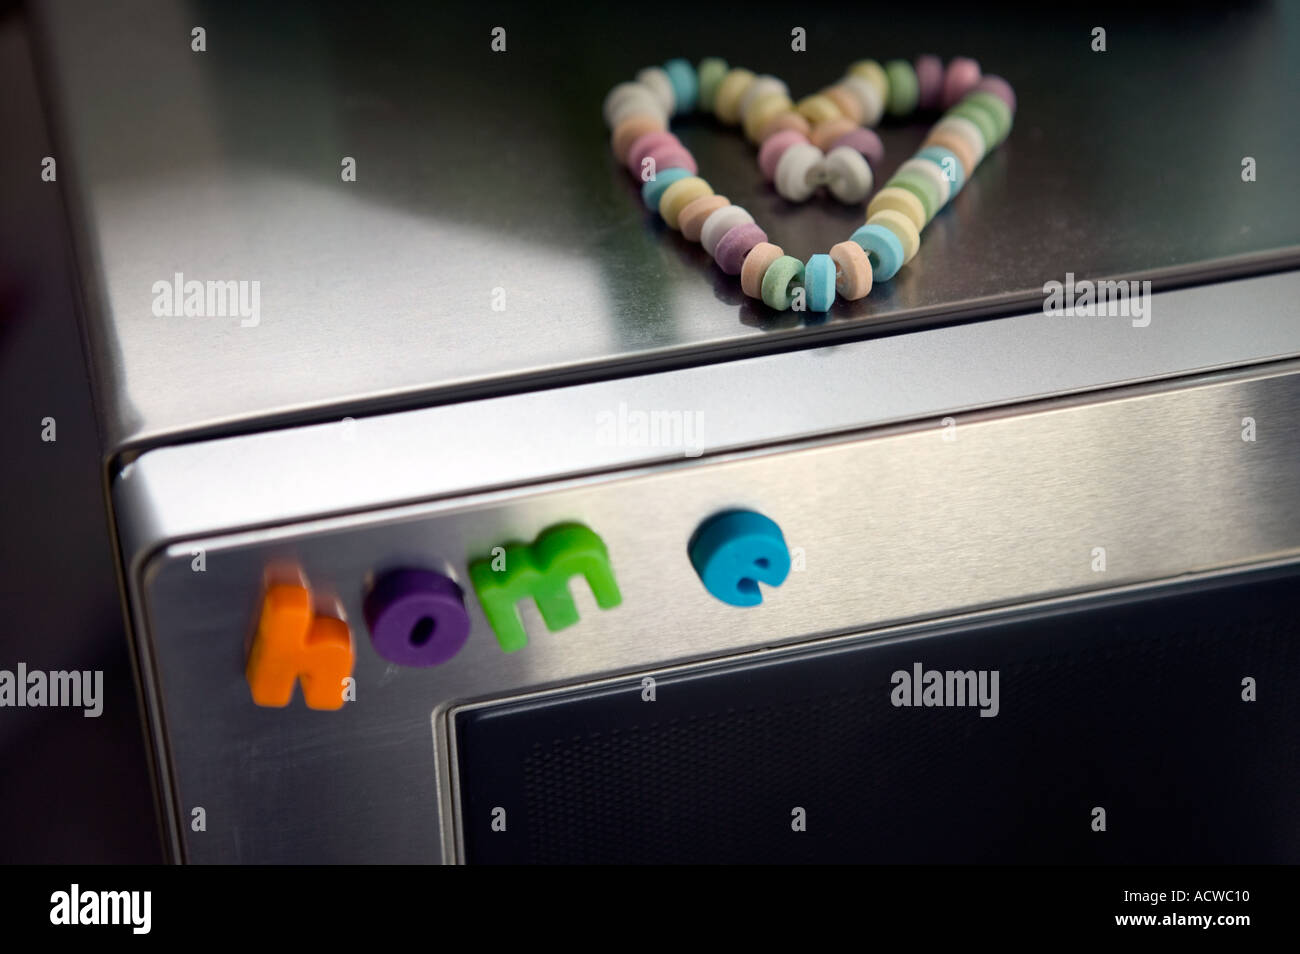 Brief-Magnete auf Mikrowelle Stockfotografie - Alamy